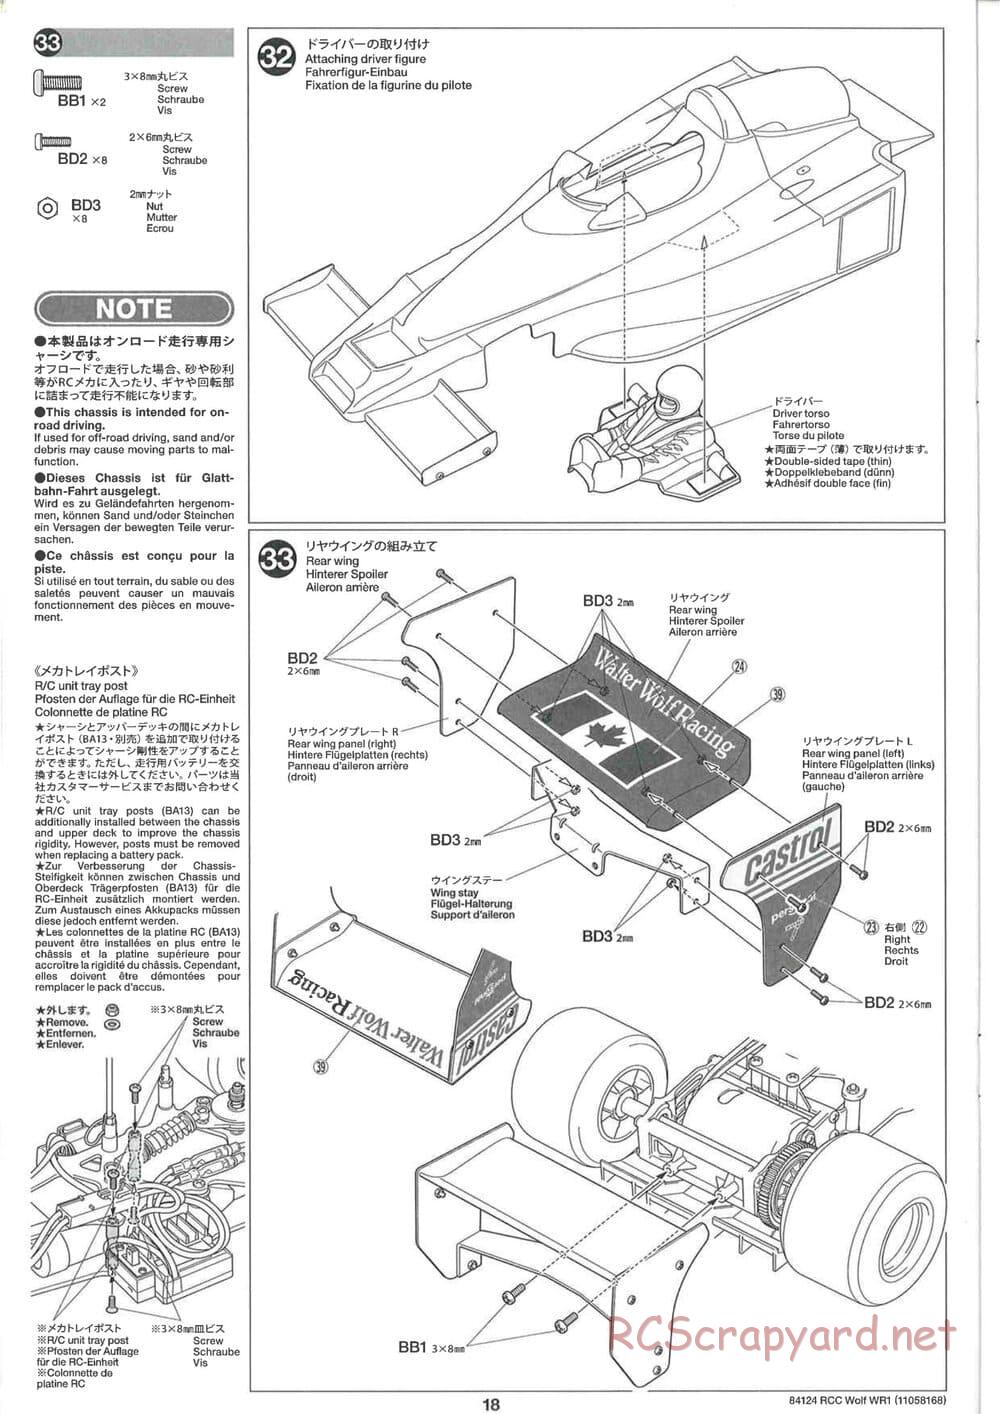 Tamiya - Wolf WR1 - F104W Chassis - Manual - Page 18